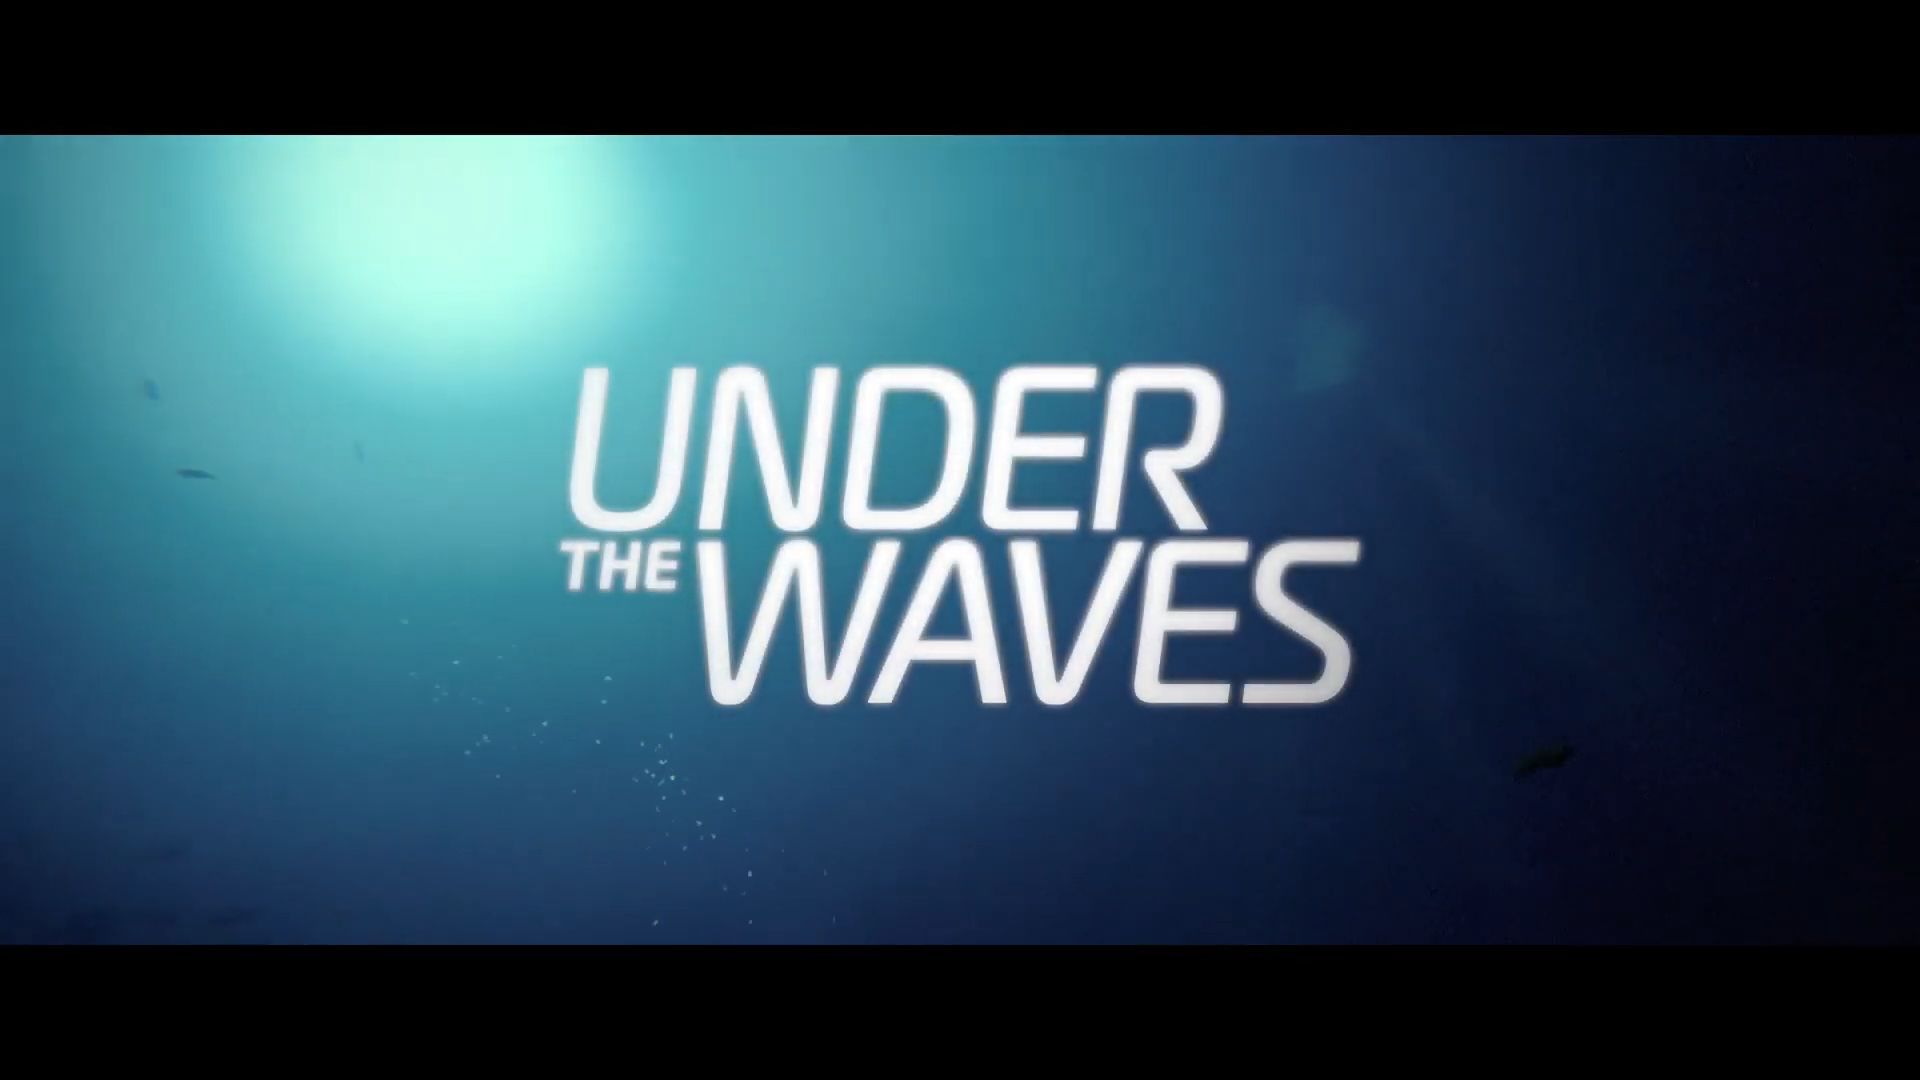 Under The Waves: Gamescom trailer for atmospheric underwater adventure game